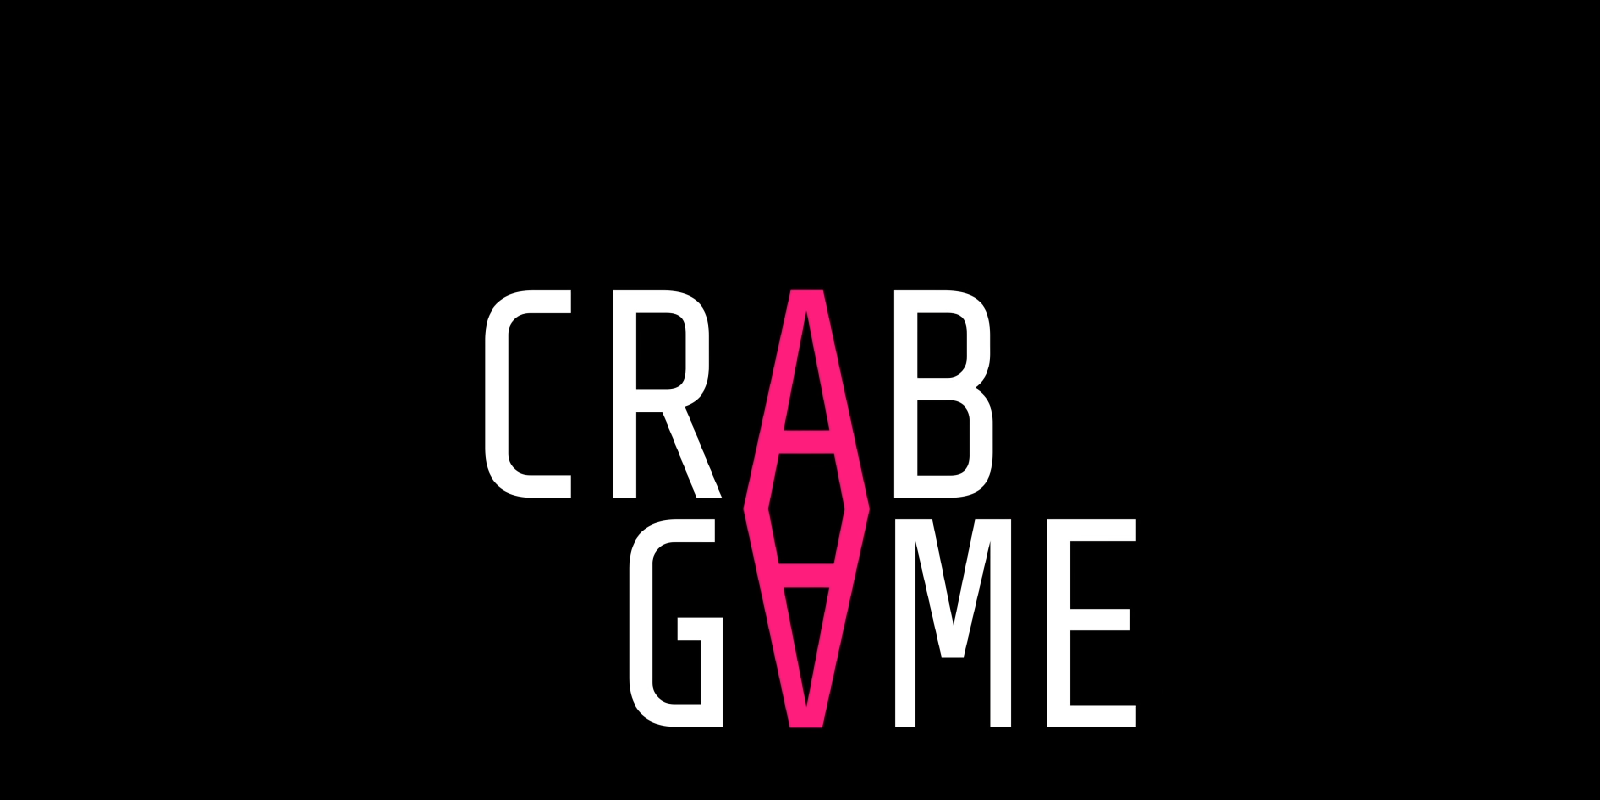 The Crab Game logo